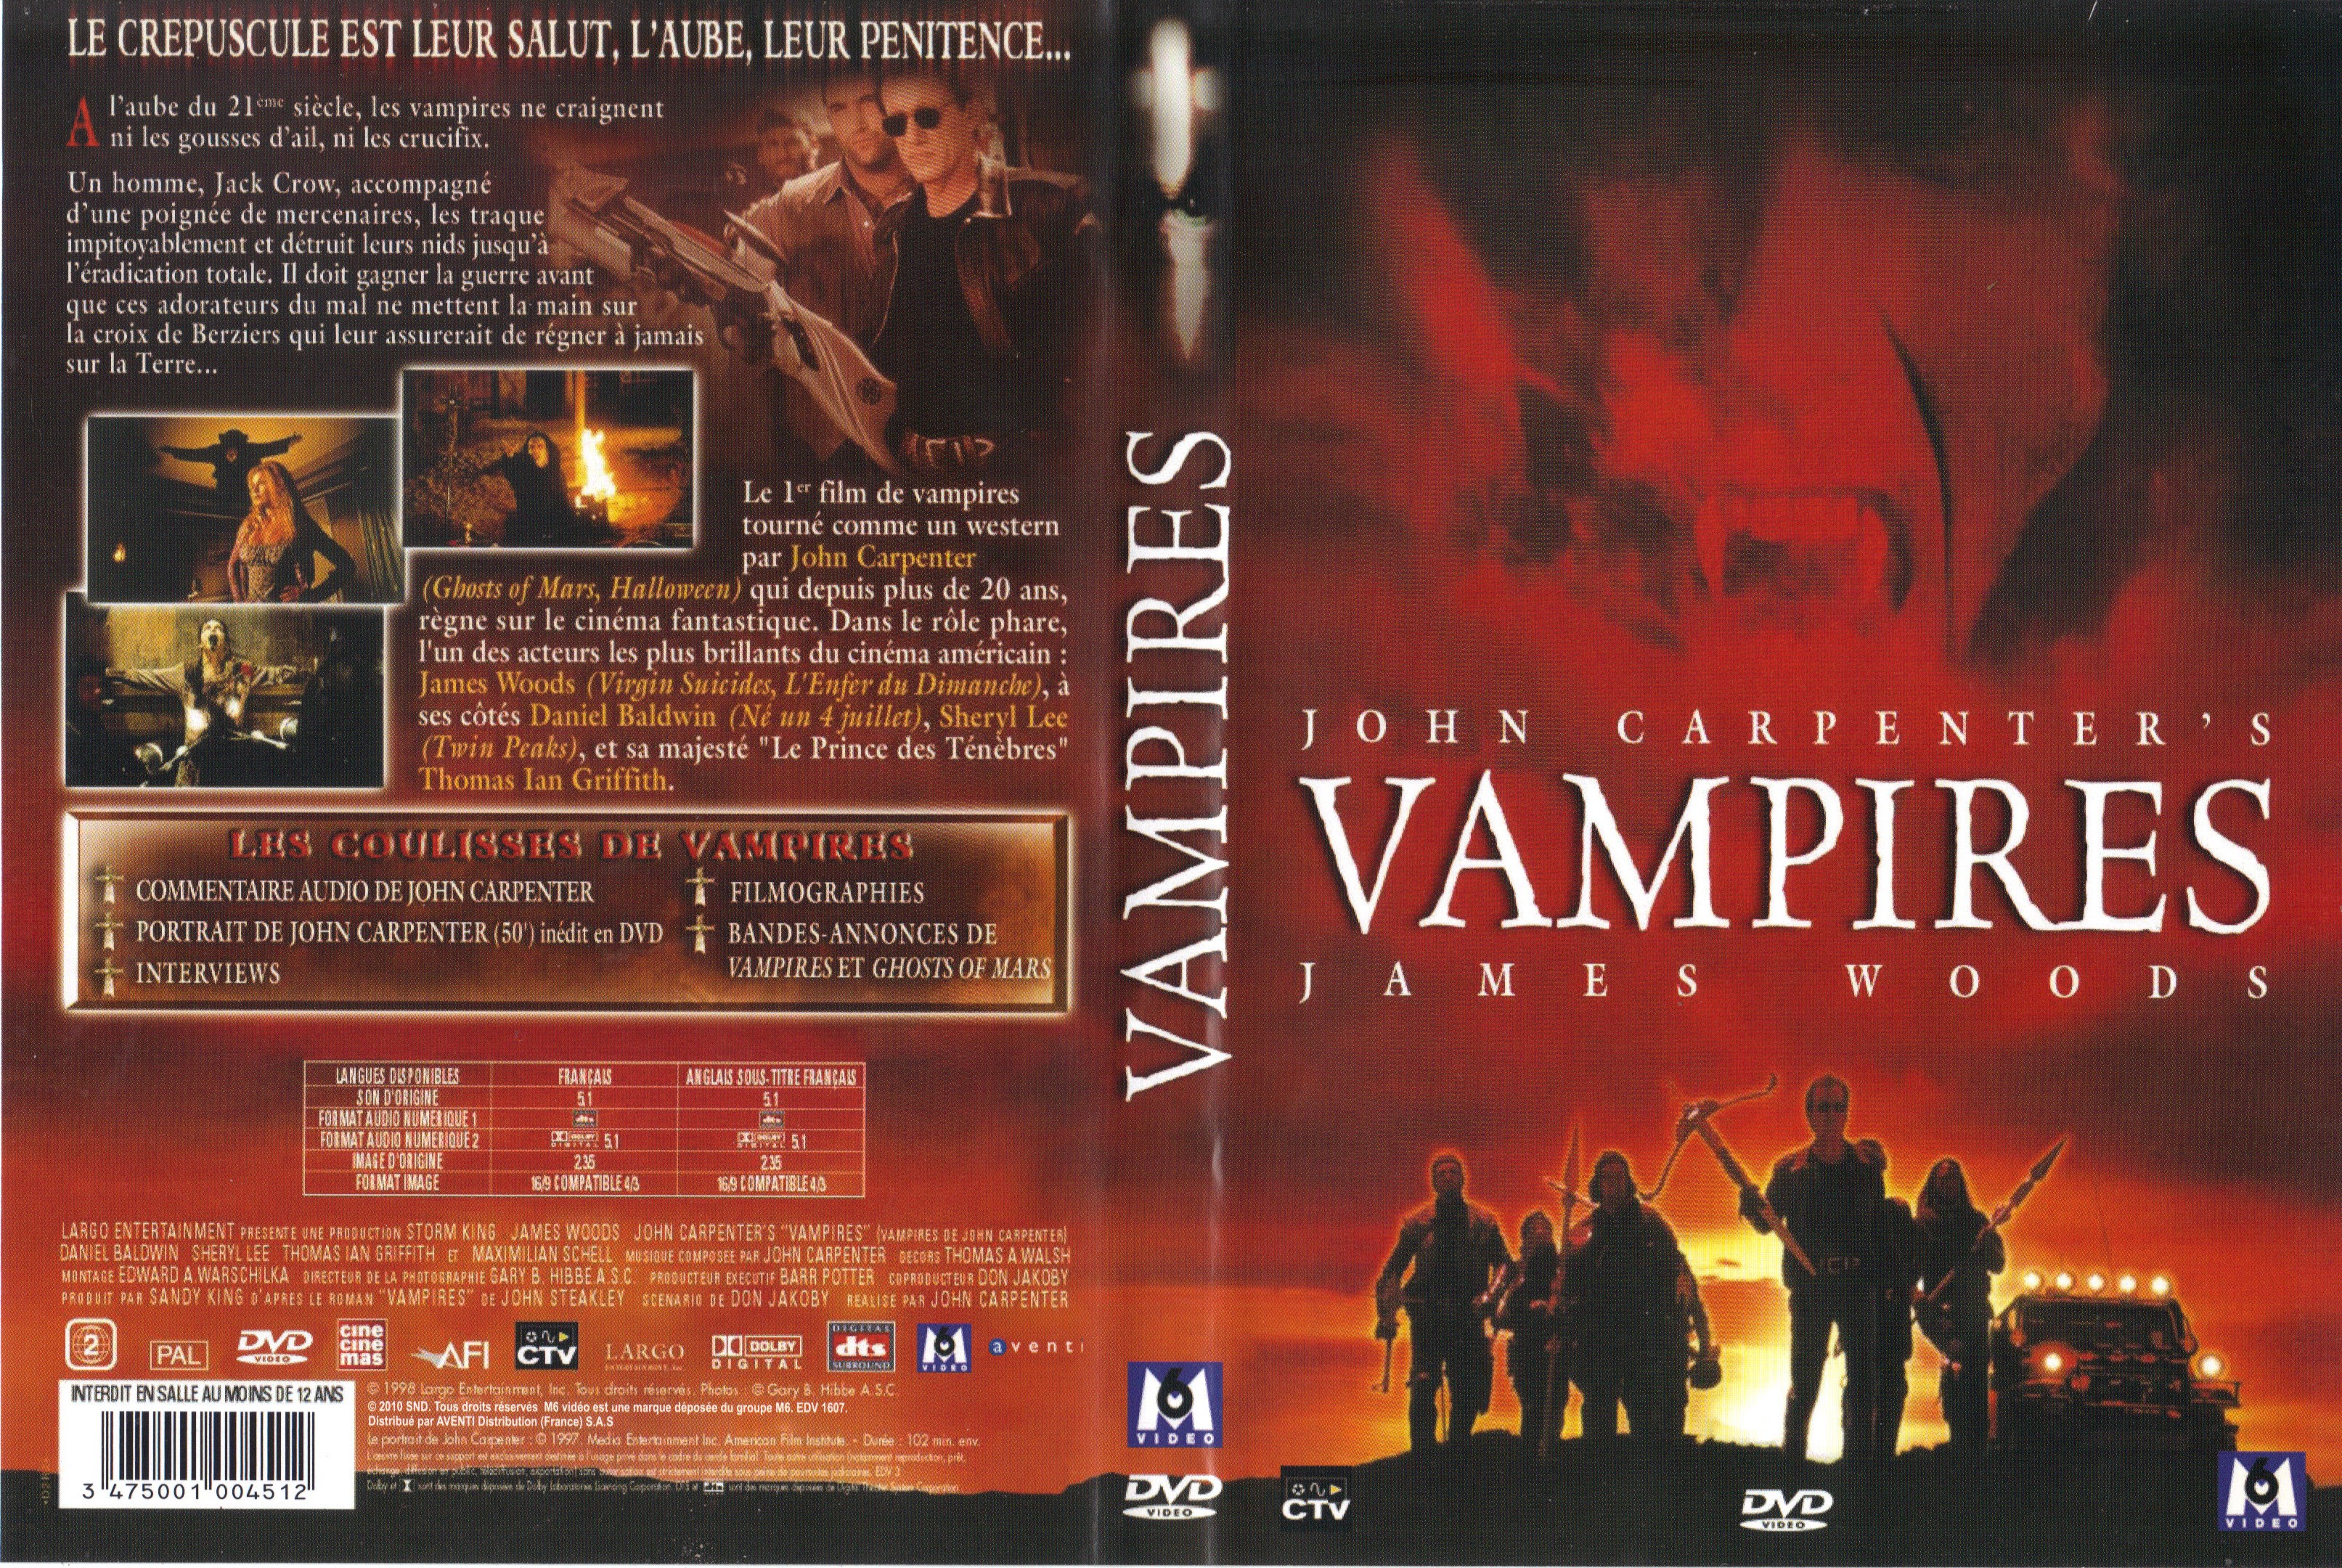 Jaquette DVD Vampires v3